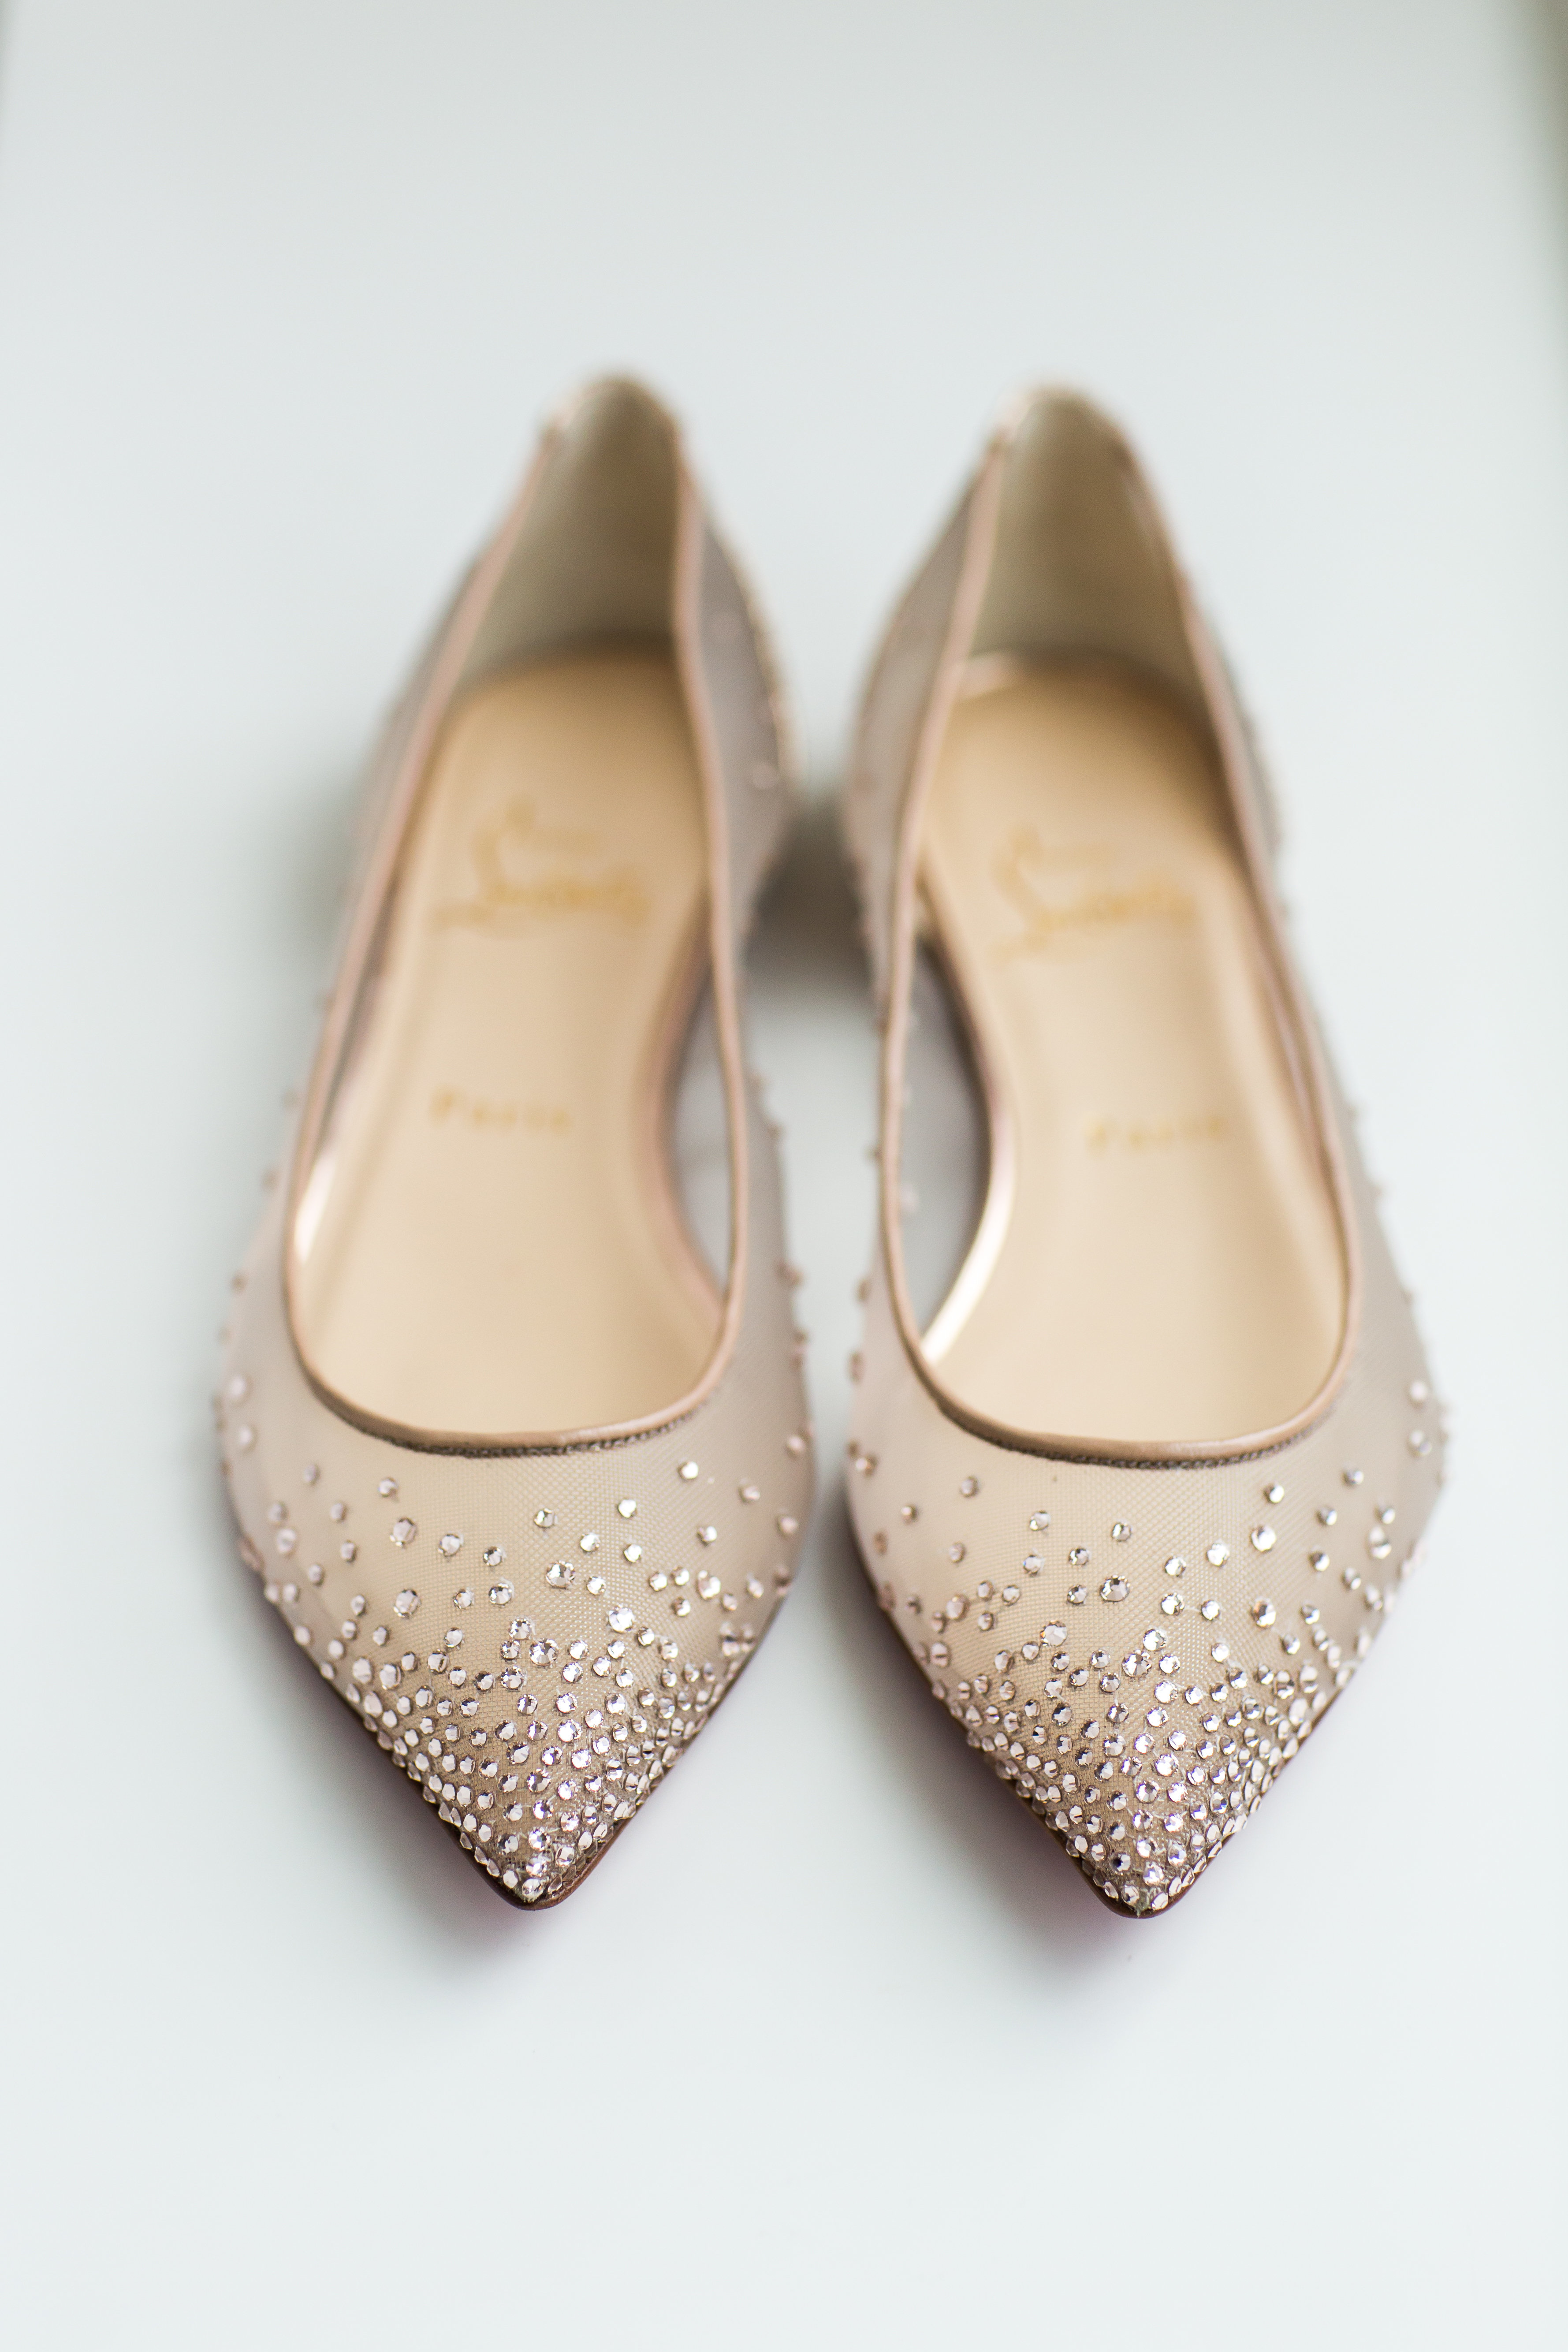 comfortable heels for bridesmaids